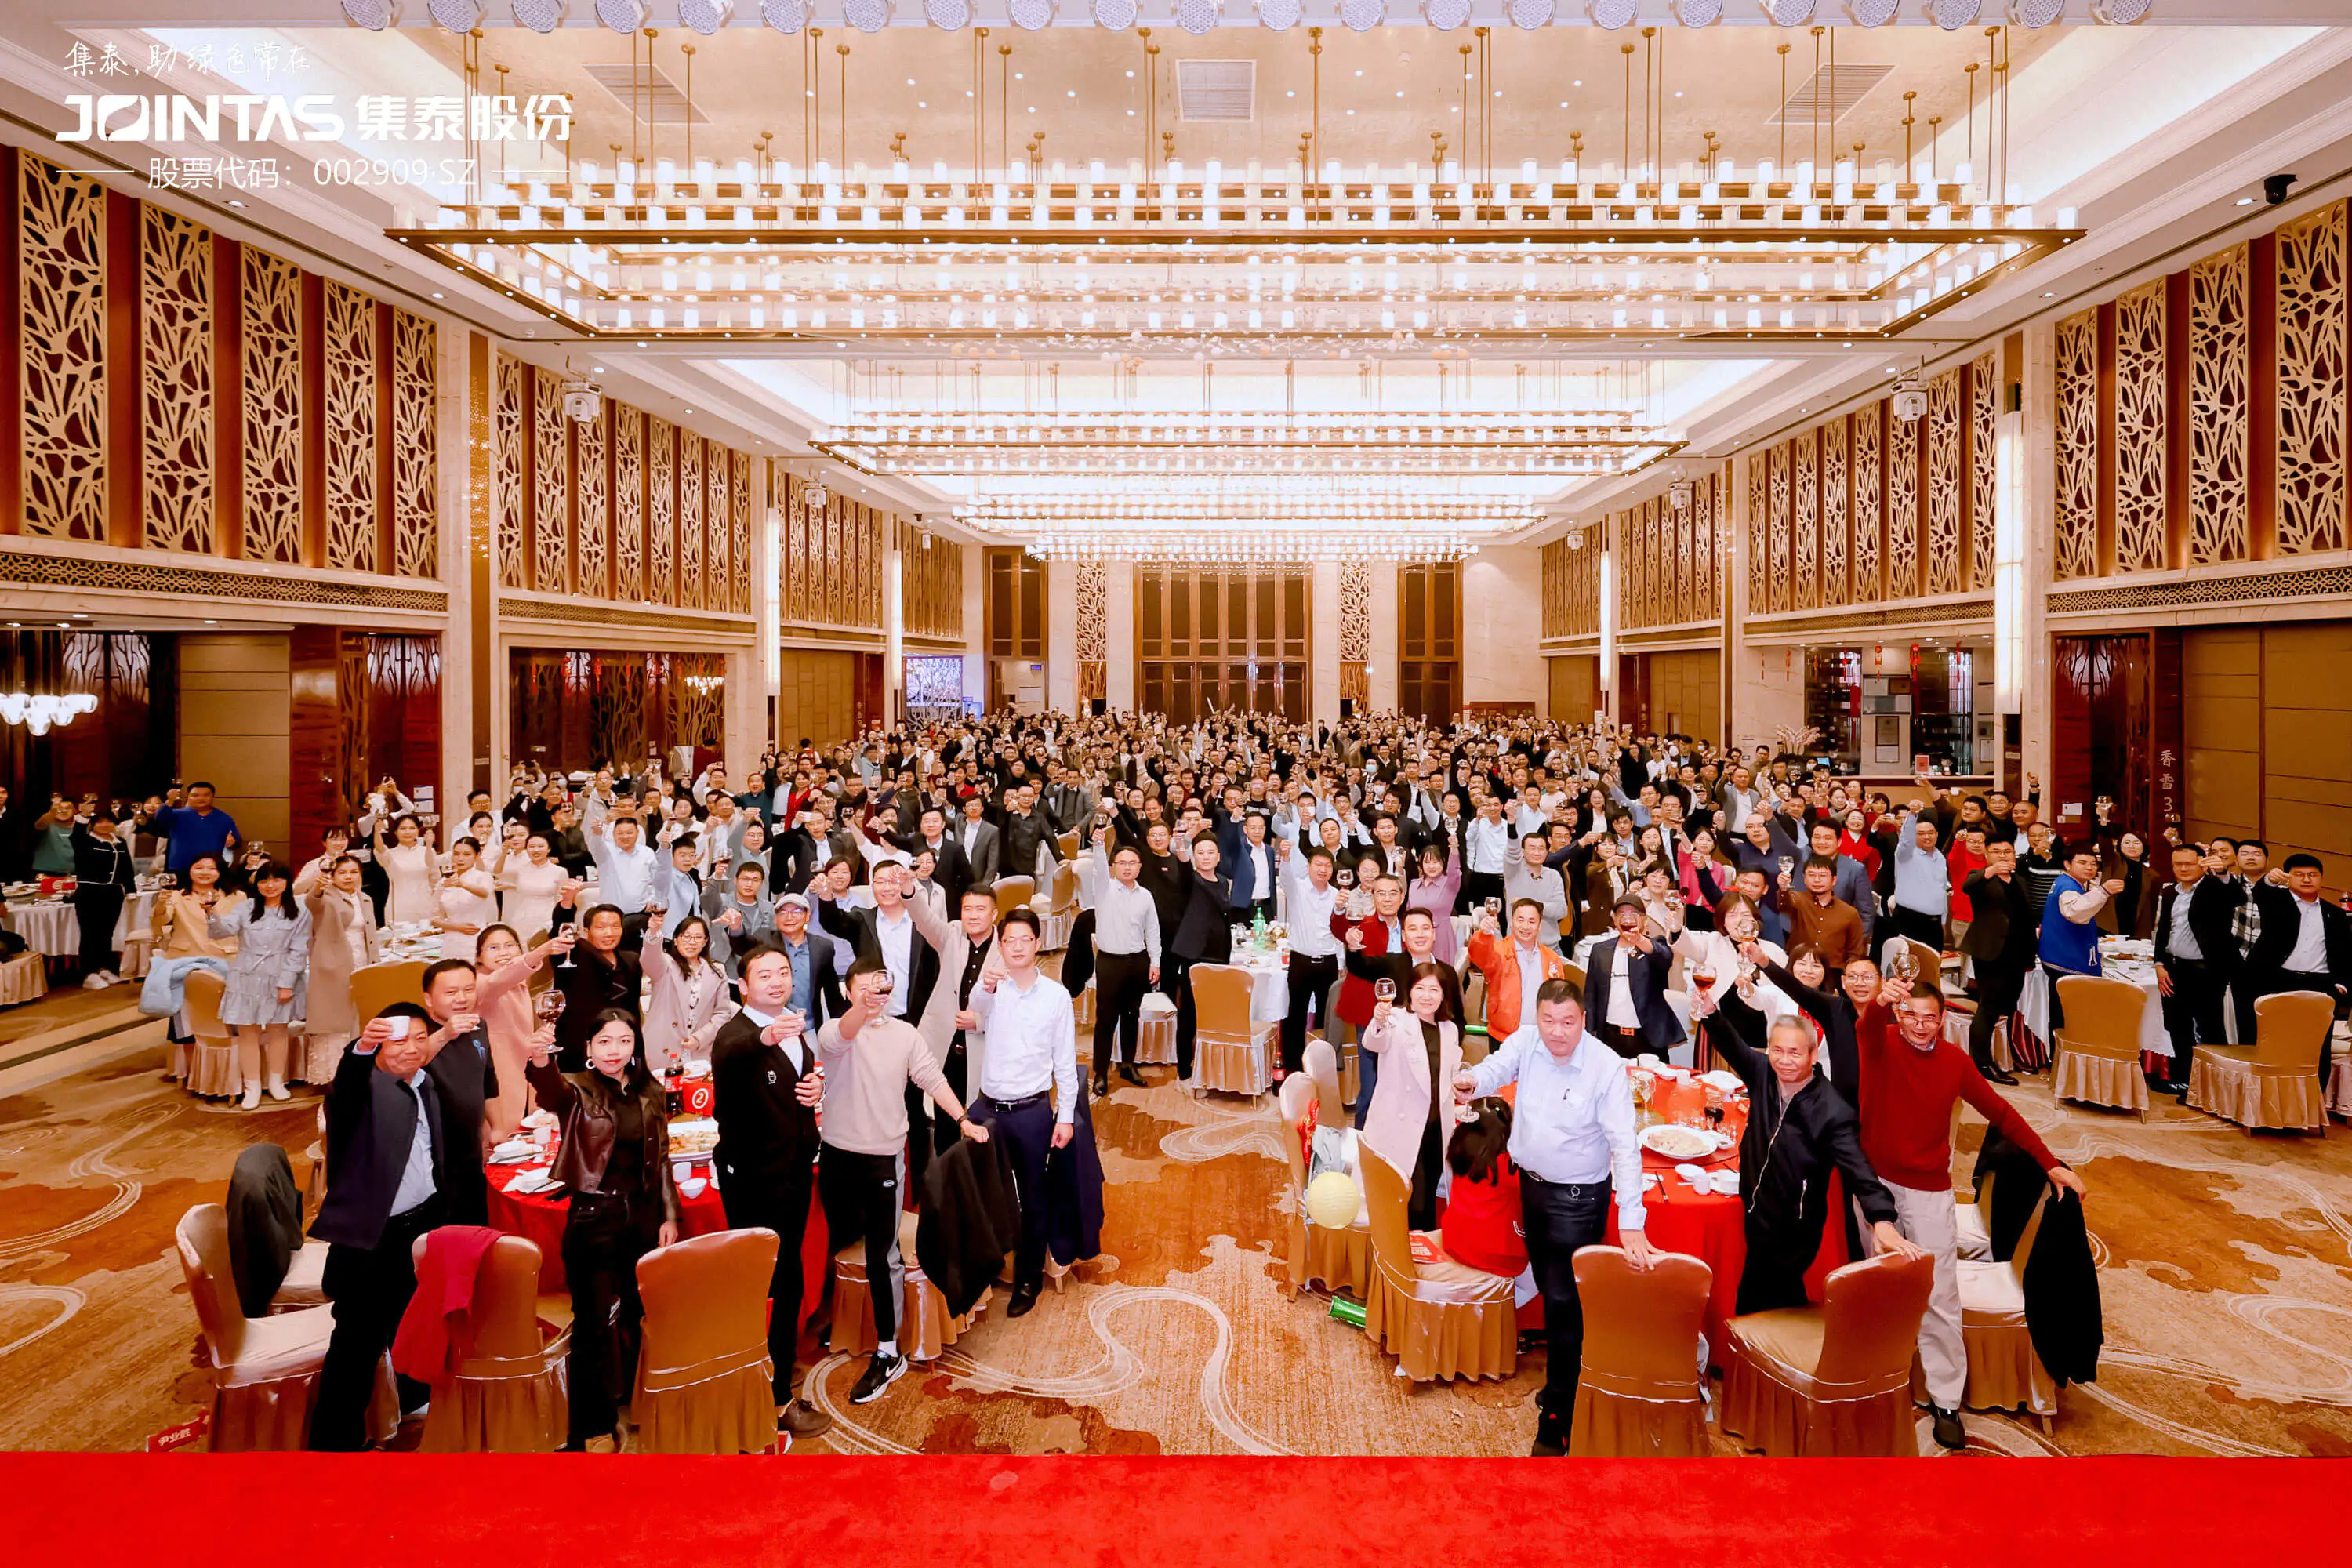 Persidangan Pujian Cemerlang dan Majlis Anugerah Jointas Chemical Co., Ltd. telah diadakan dengan hebat di Guangzhou!